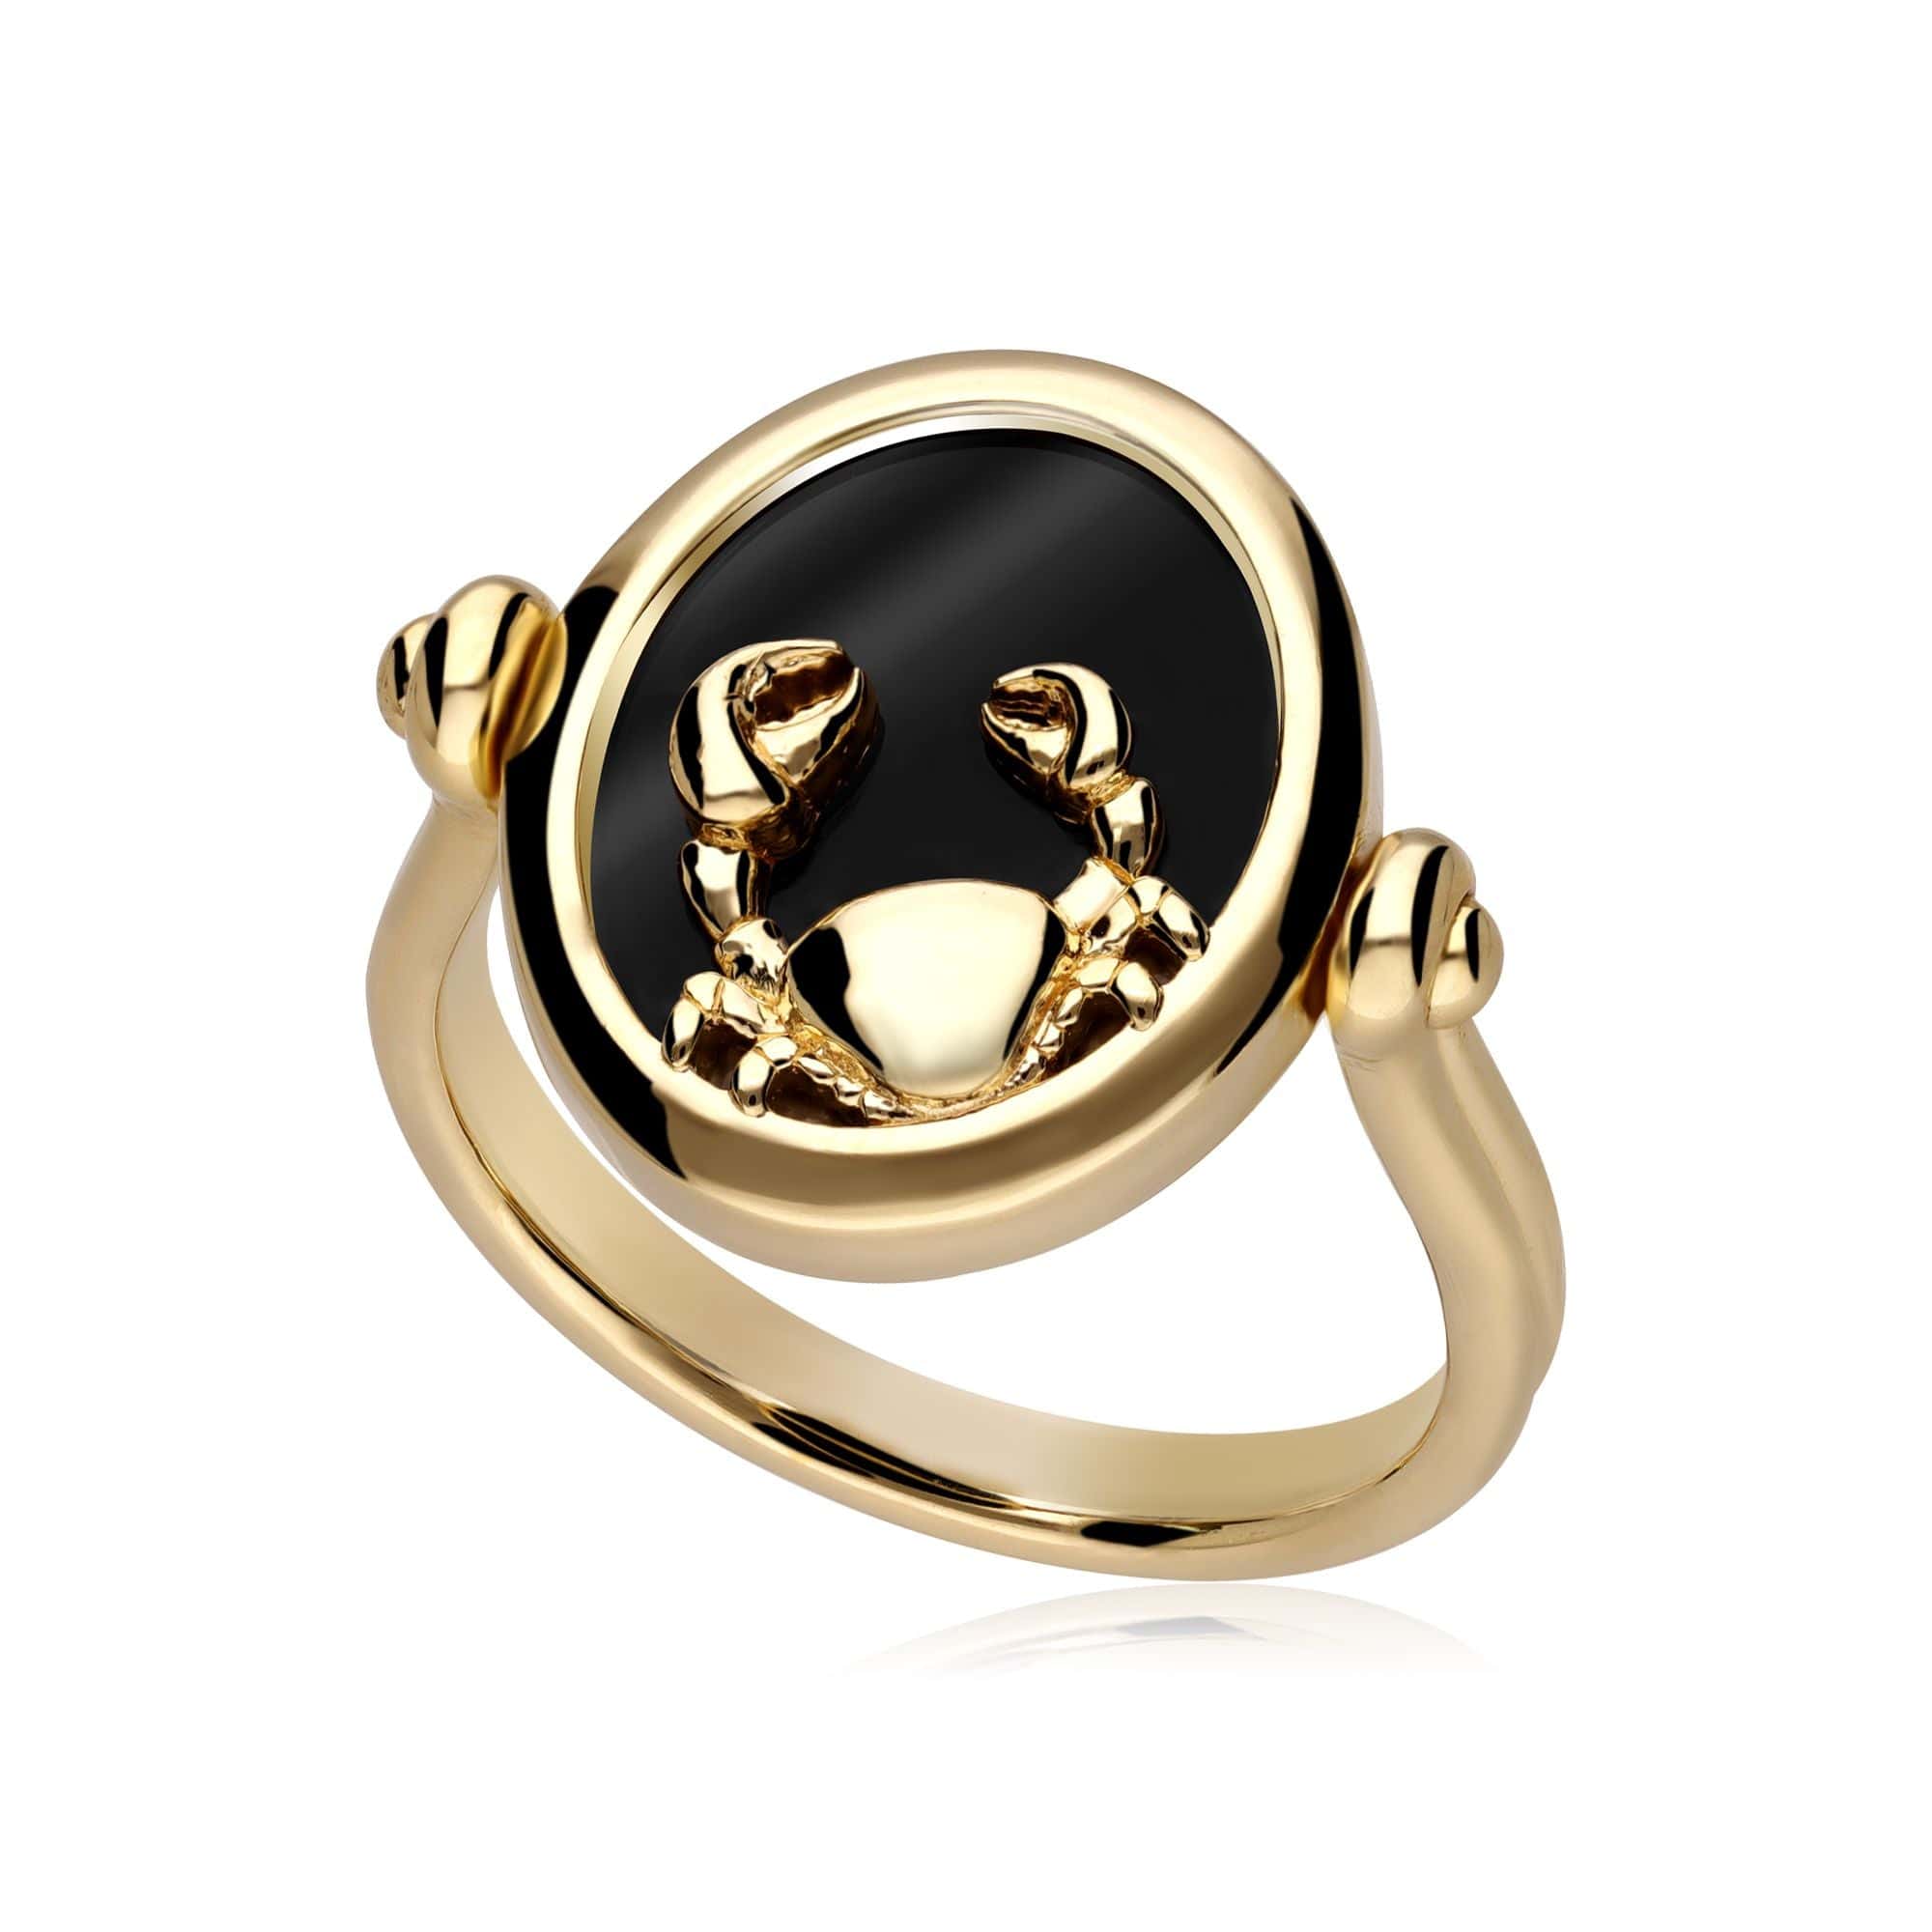 Gemondo Zodiac Black Onyx Cancer Flip Ring in 18ct Gold Plated Silver